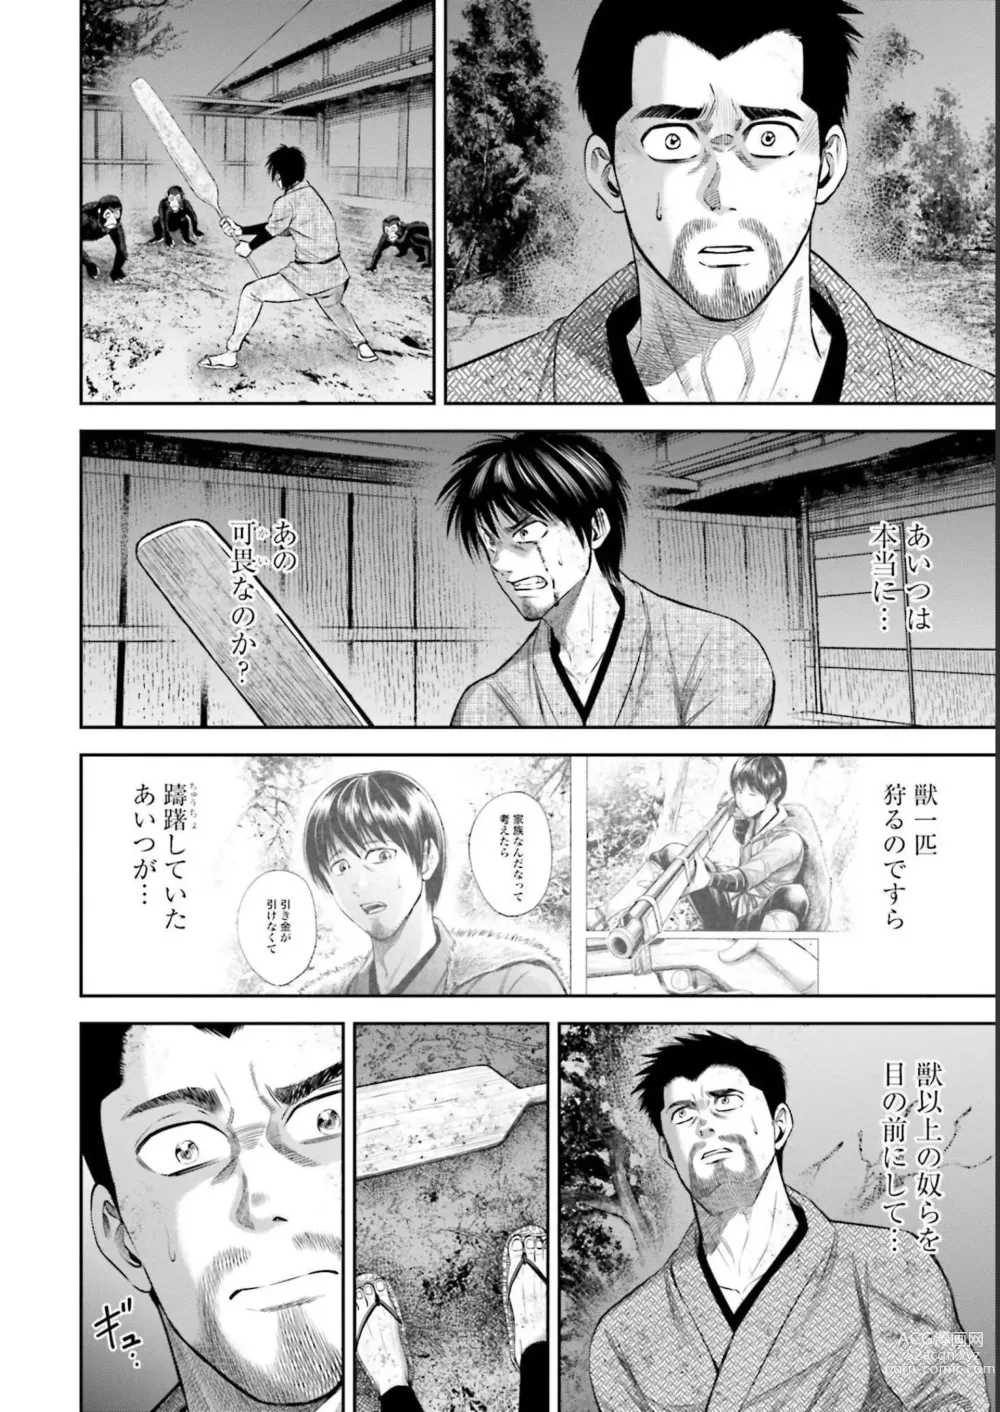 Page 12 of manga Sarumane Vol. 3